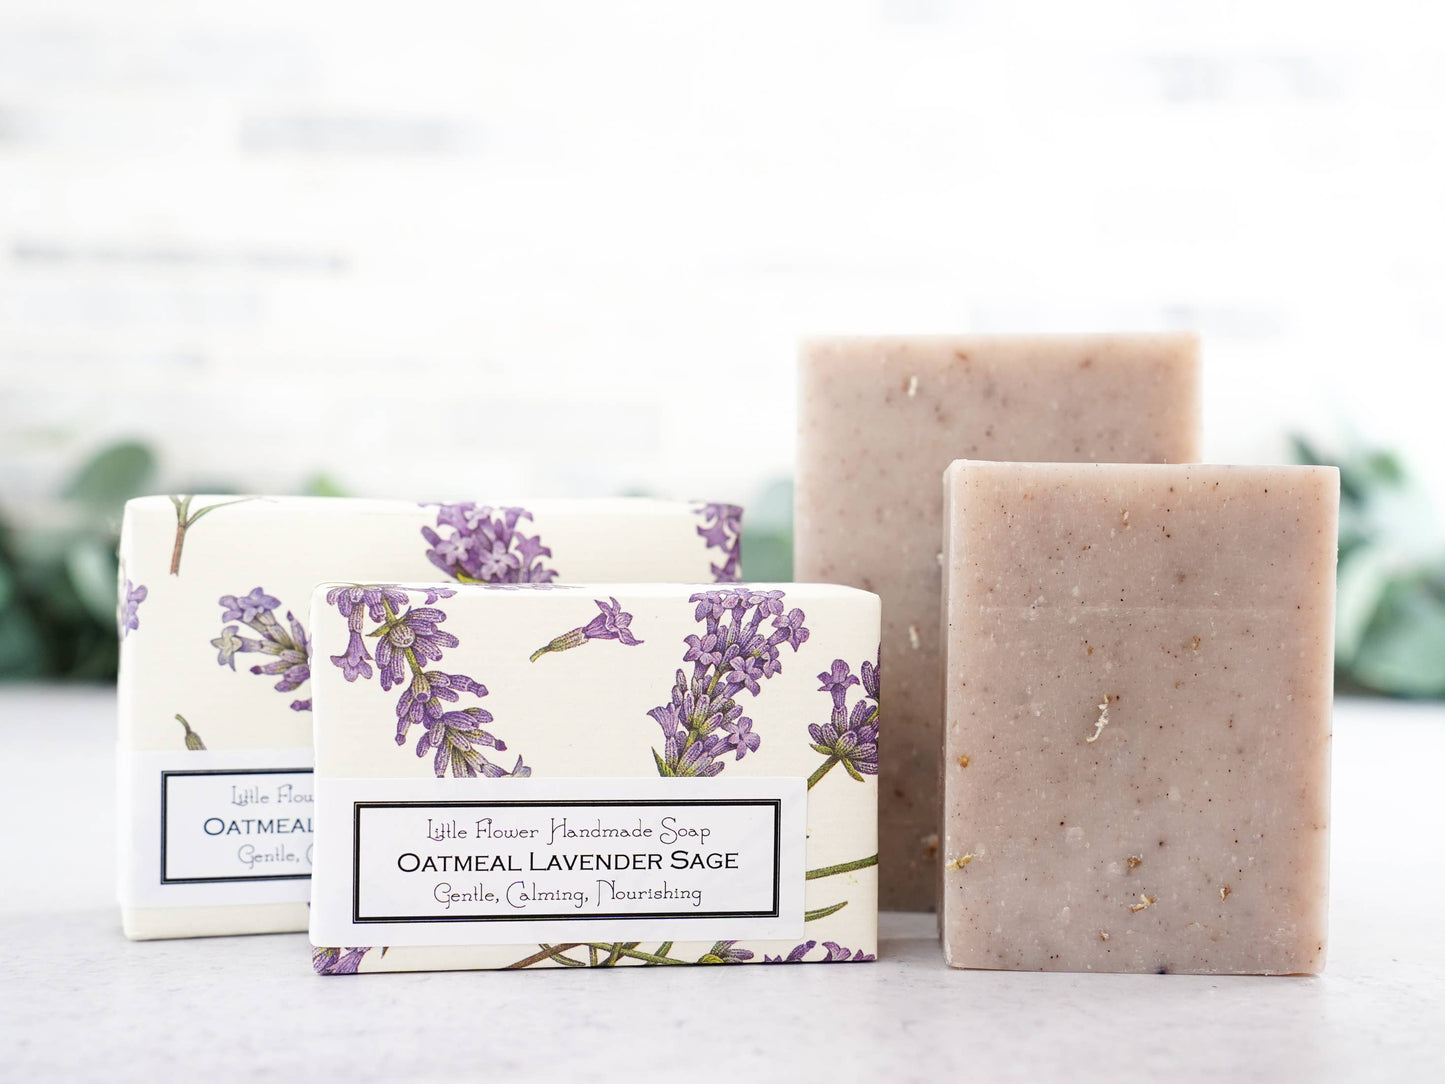 Oatmeal Lavender Sage Handmade Soap: 3.5 oz